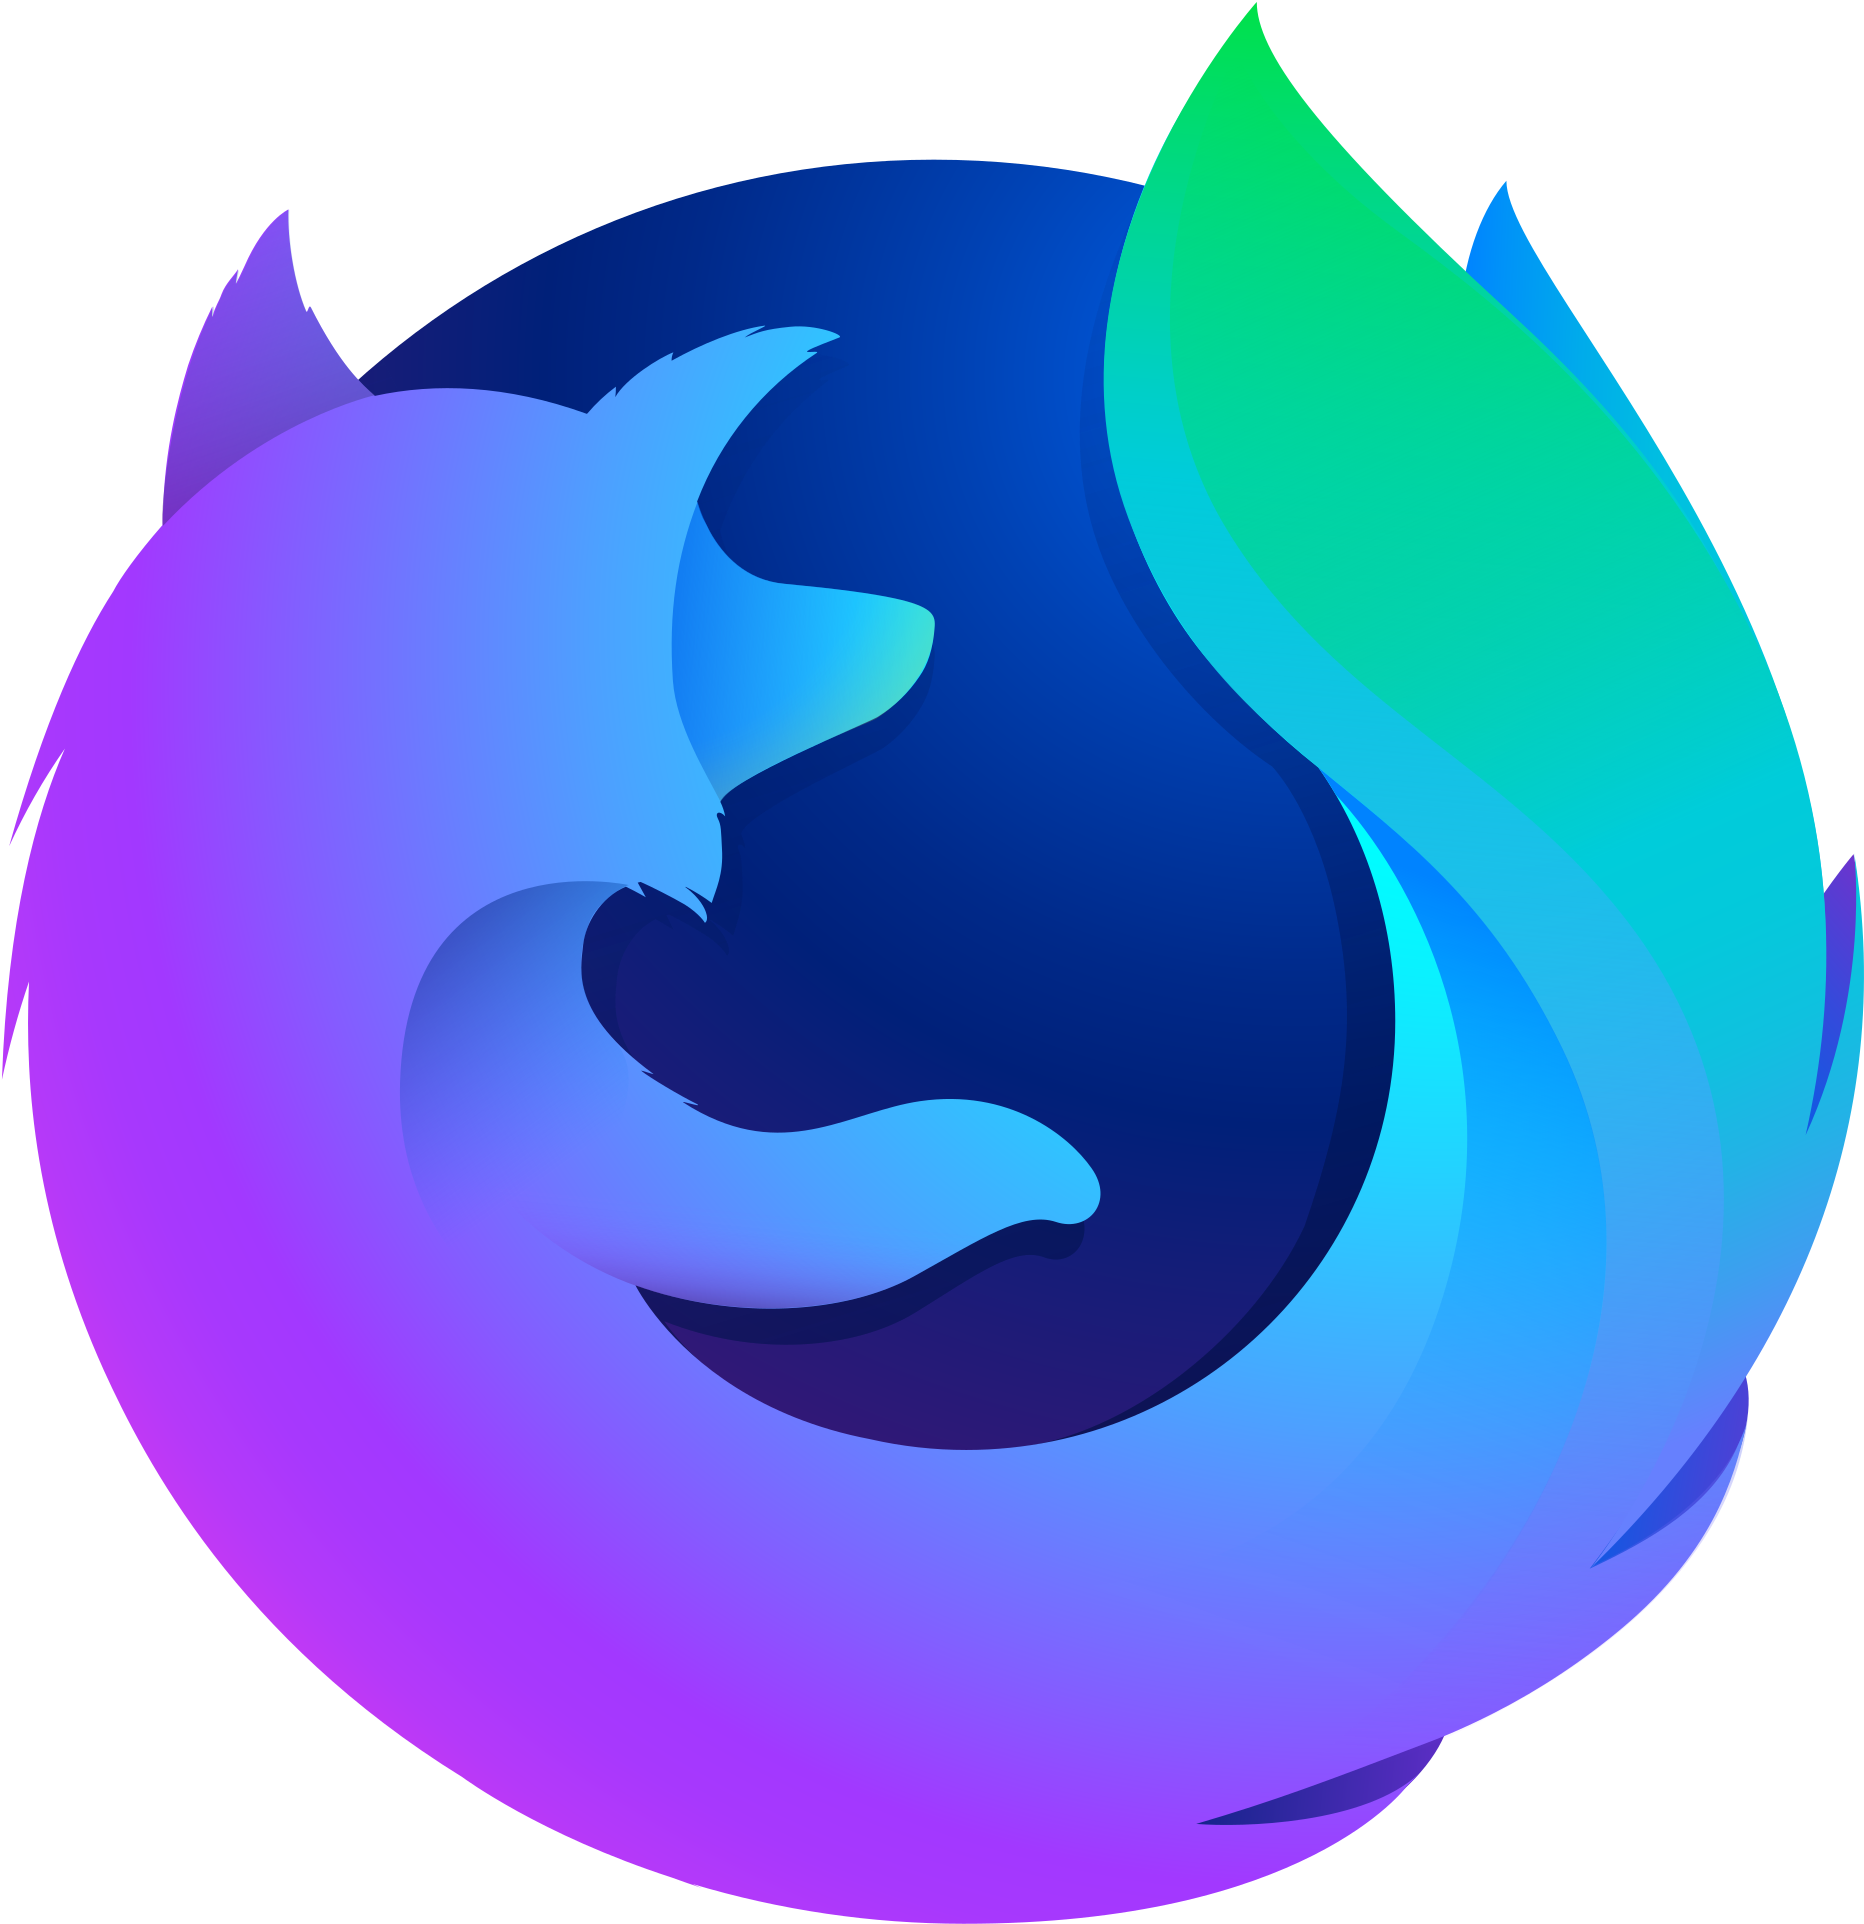 Ярлык firefox. Значок Firefox. Mozilla Firefox иконки. Значок браузера Mozilla Firefox. Firefox Nightly logo.